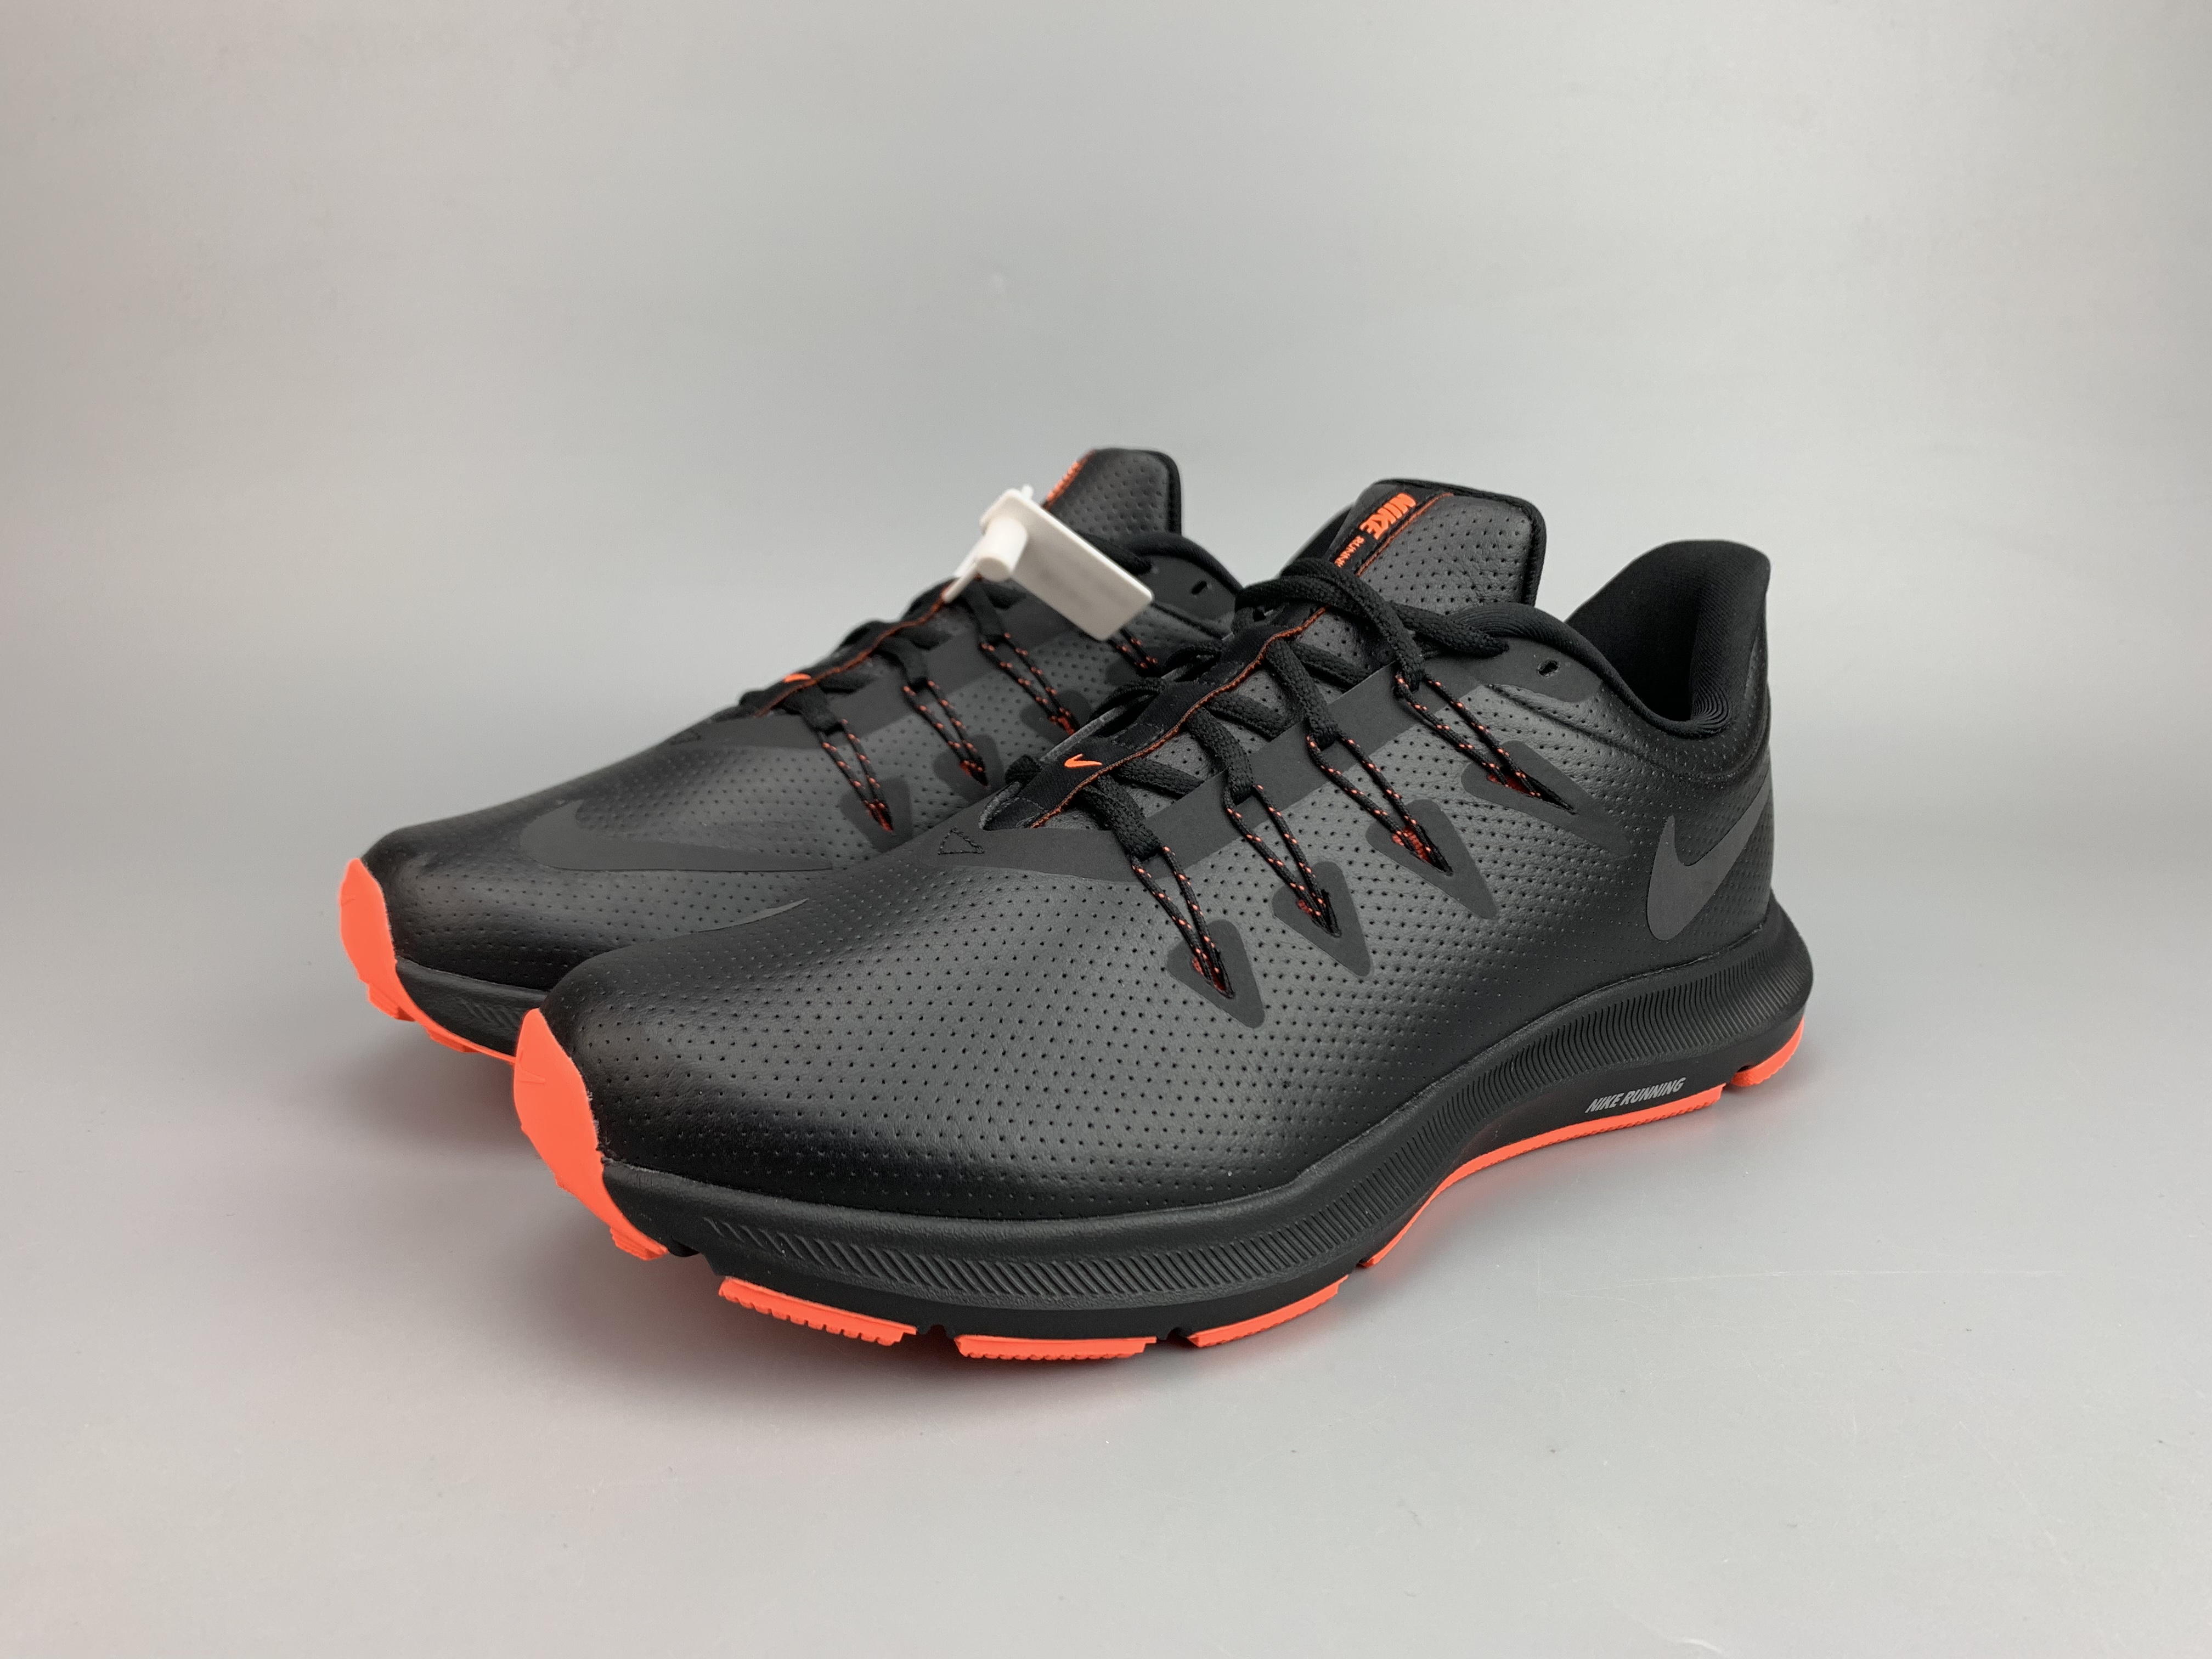 Nike Quest II Leather Black Orange Running Shoes